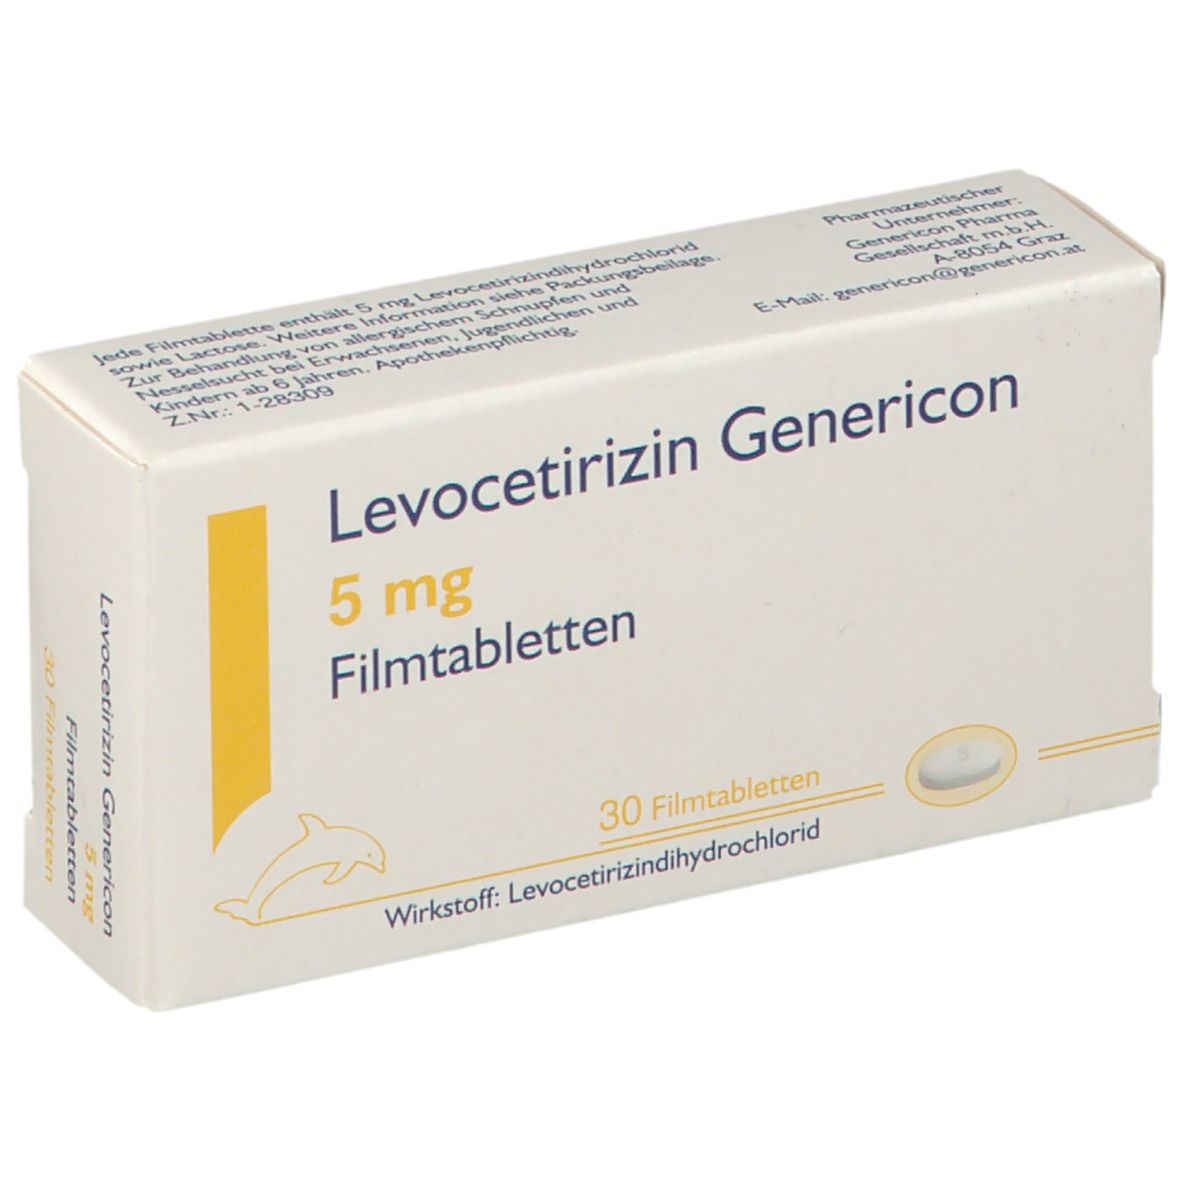 Levocetirizin Genericon 5 mg